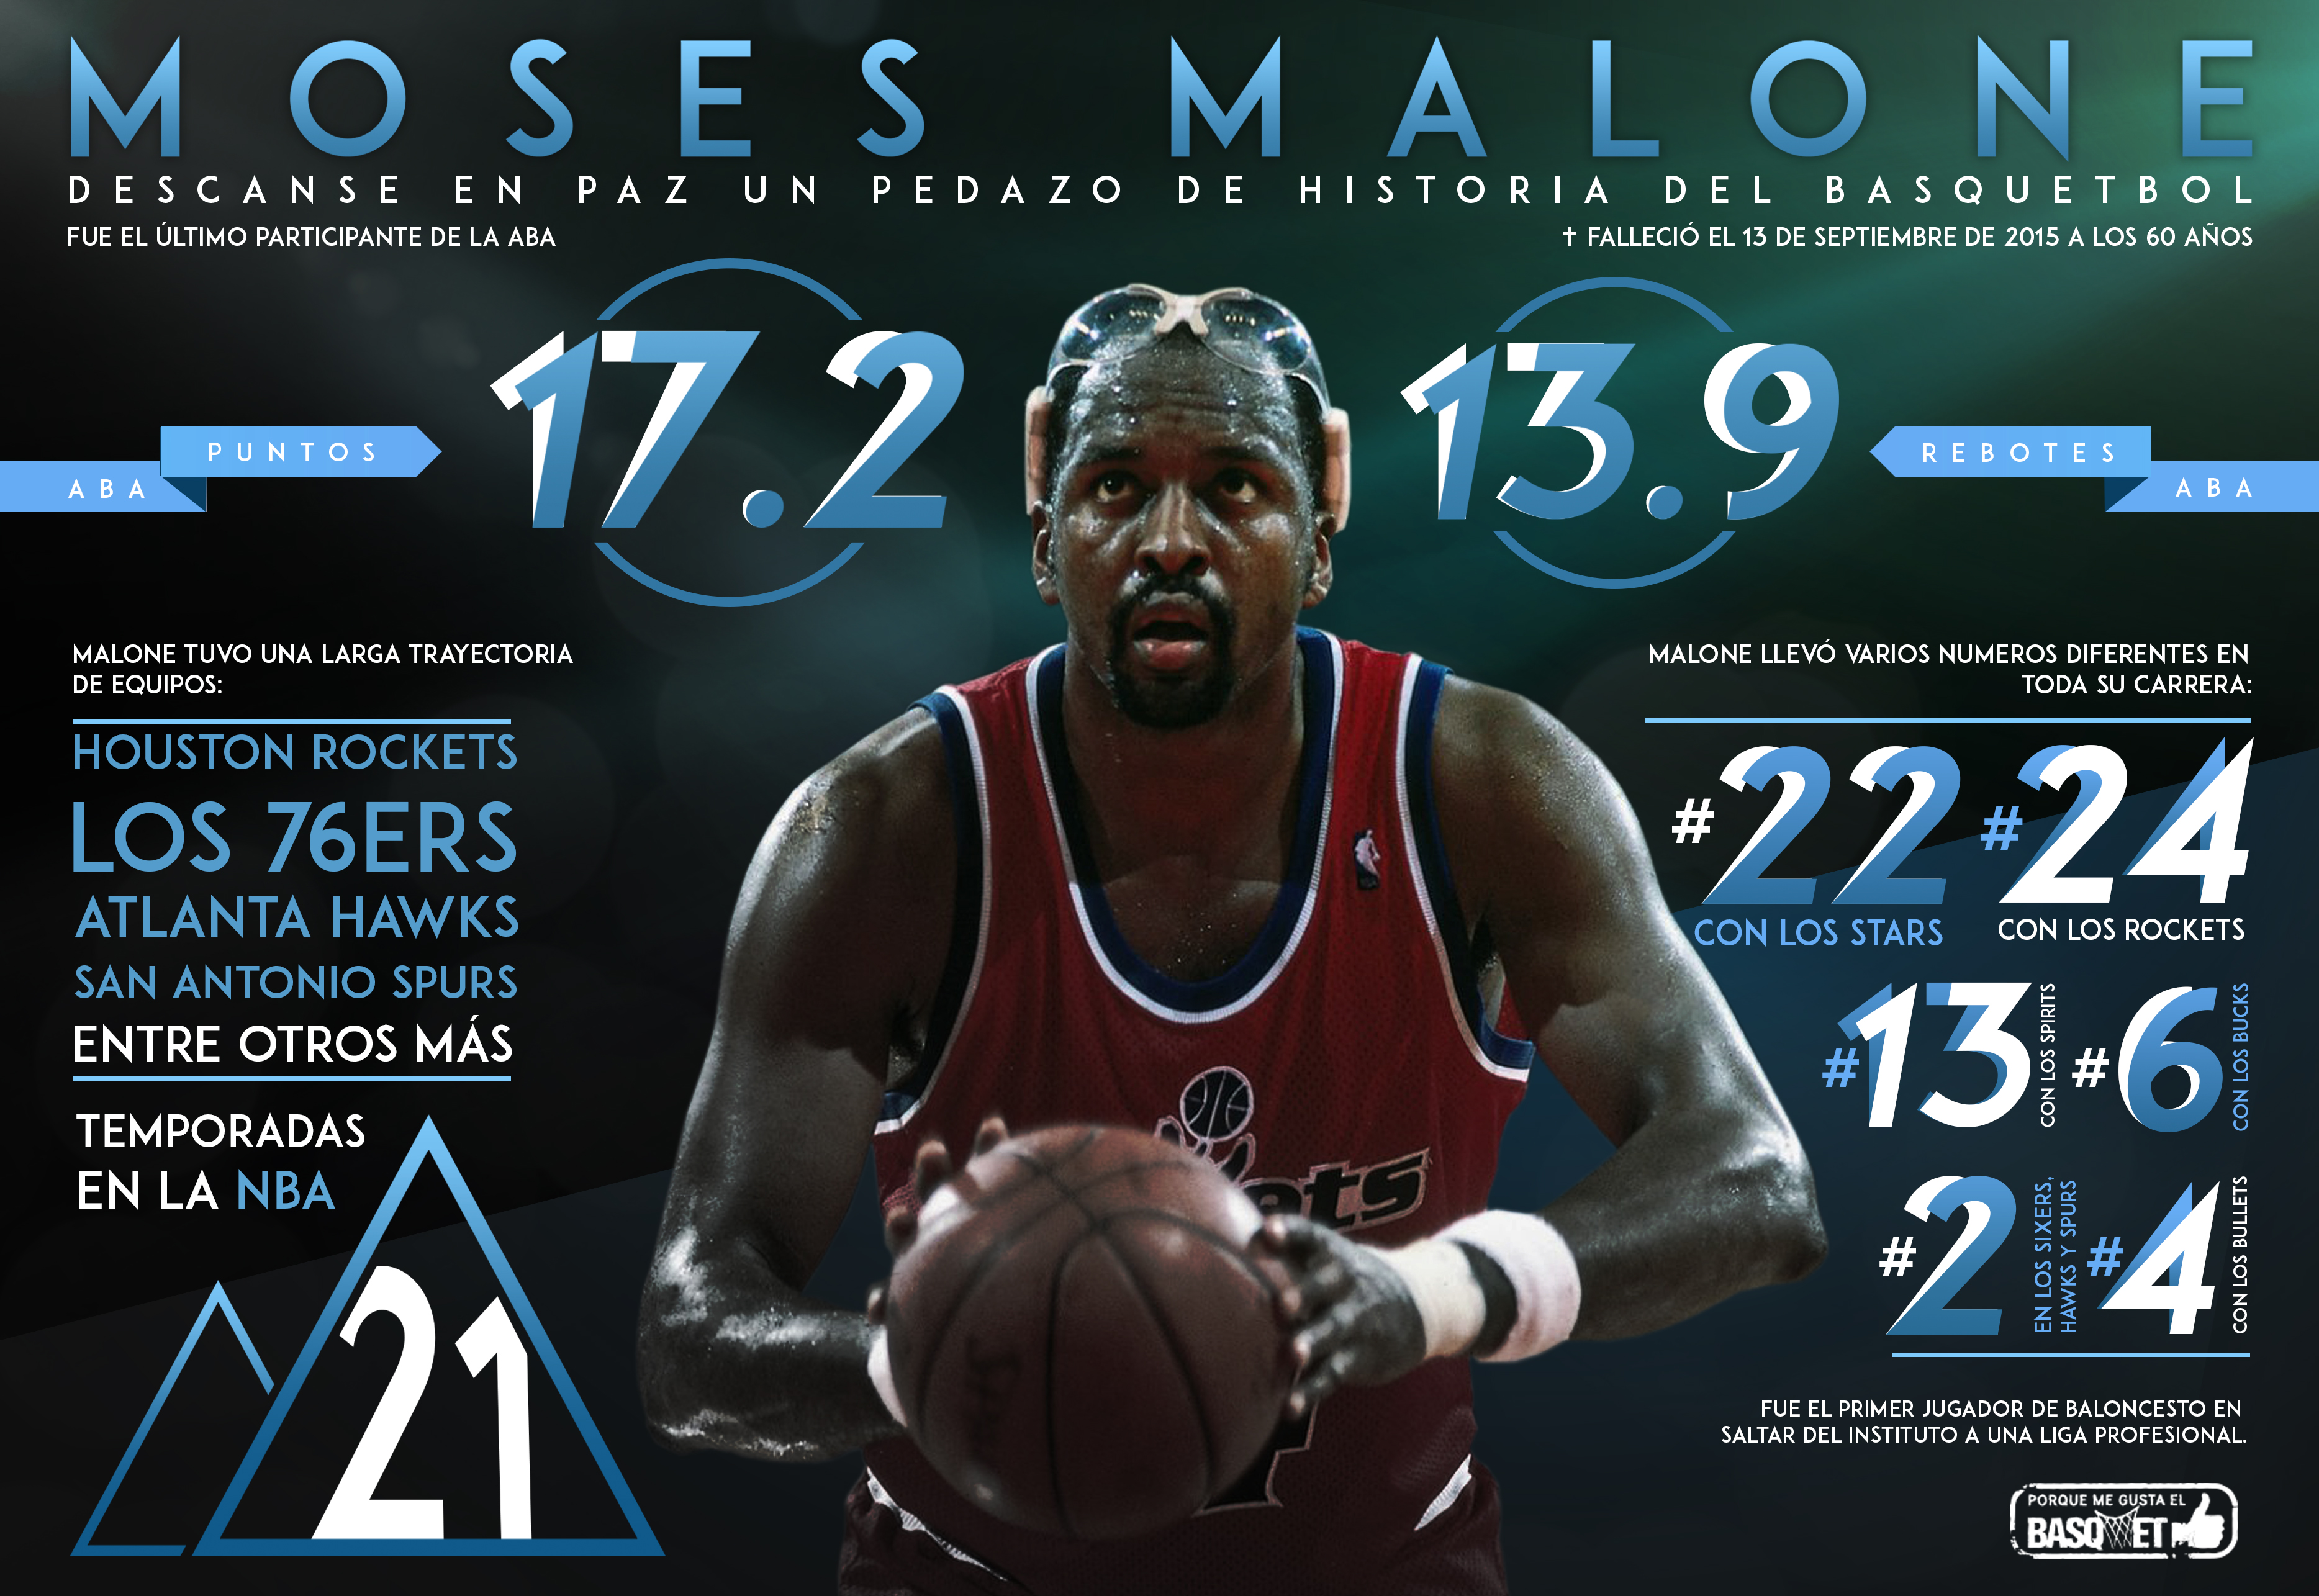 Moses Malone, un gran pedazo de historia del basquetbol por Viva Basquet.